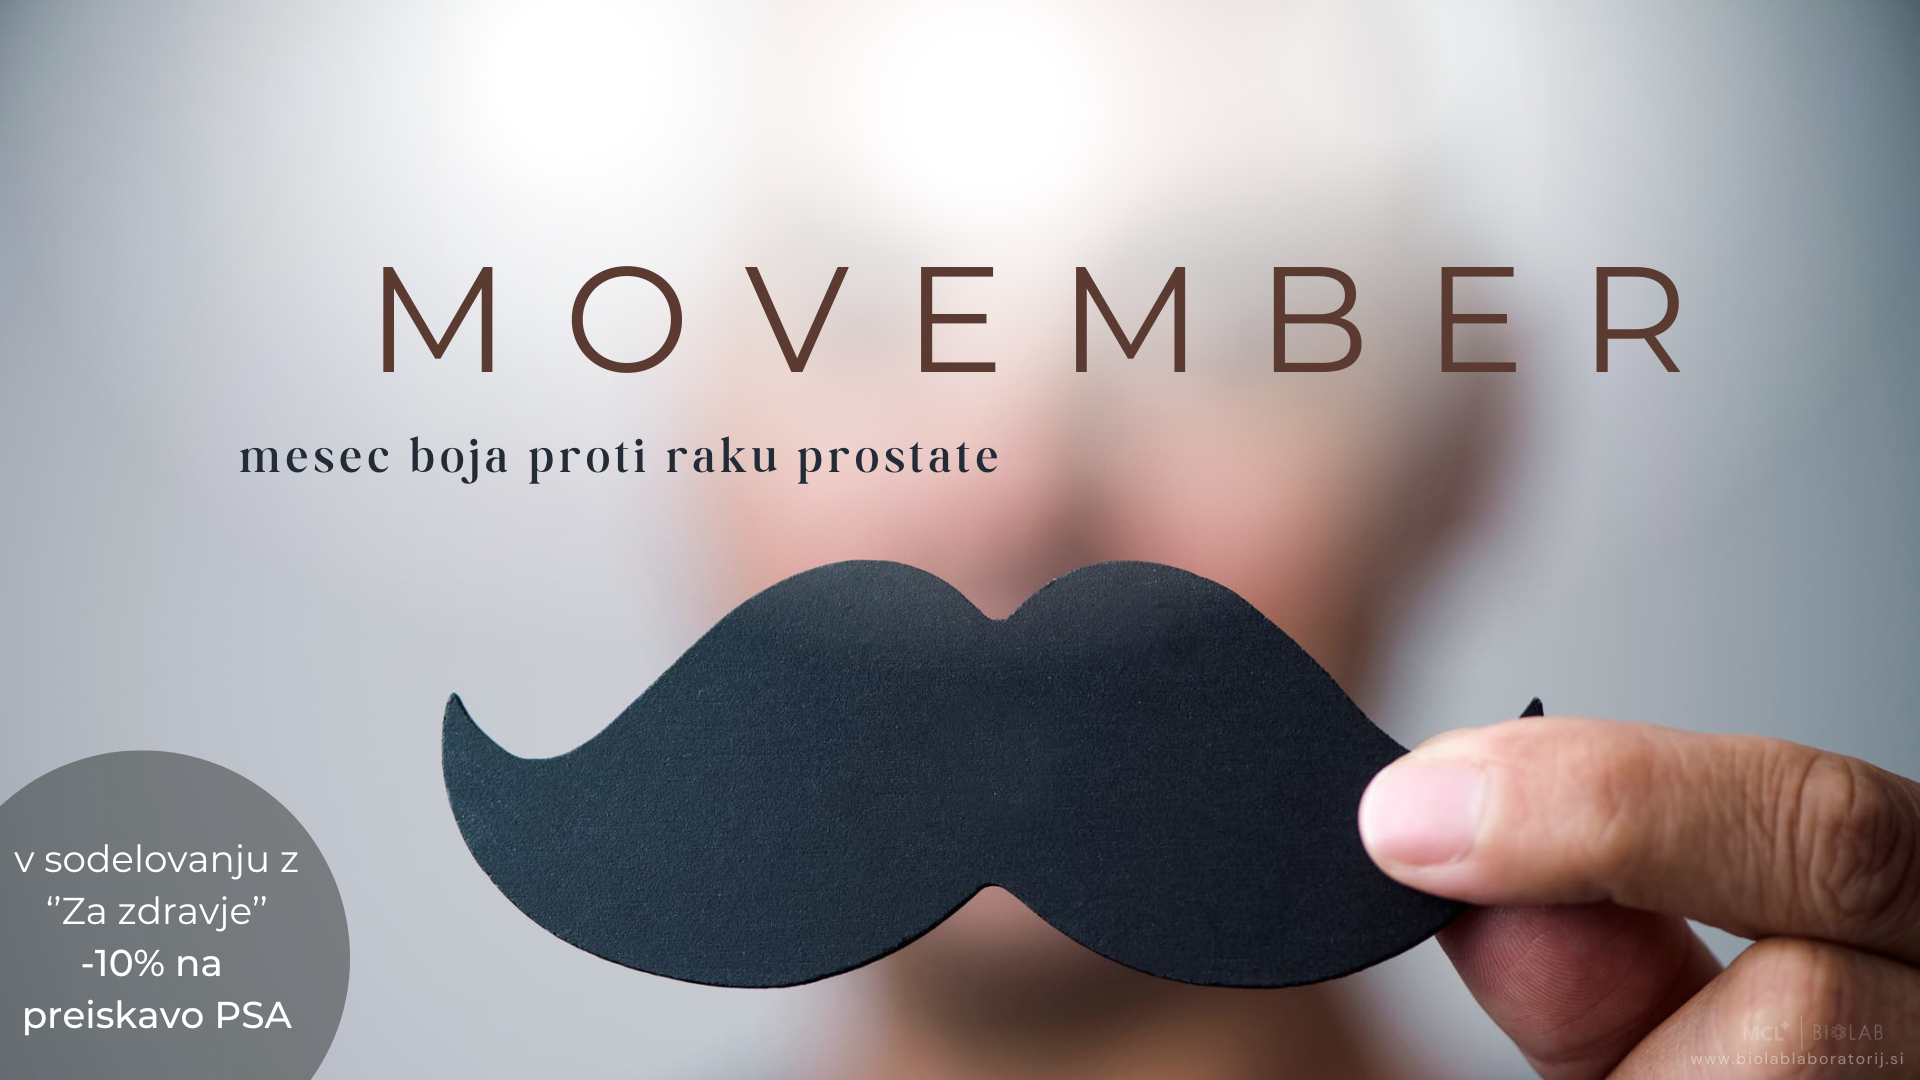 MOVEMBER - mesec boja proti raku prostate